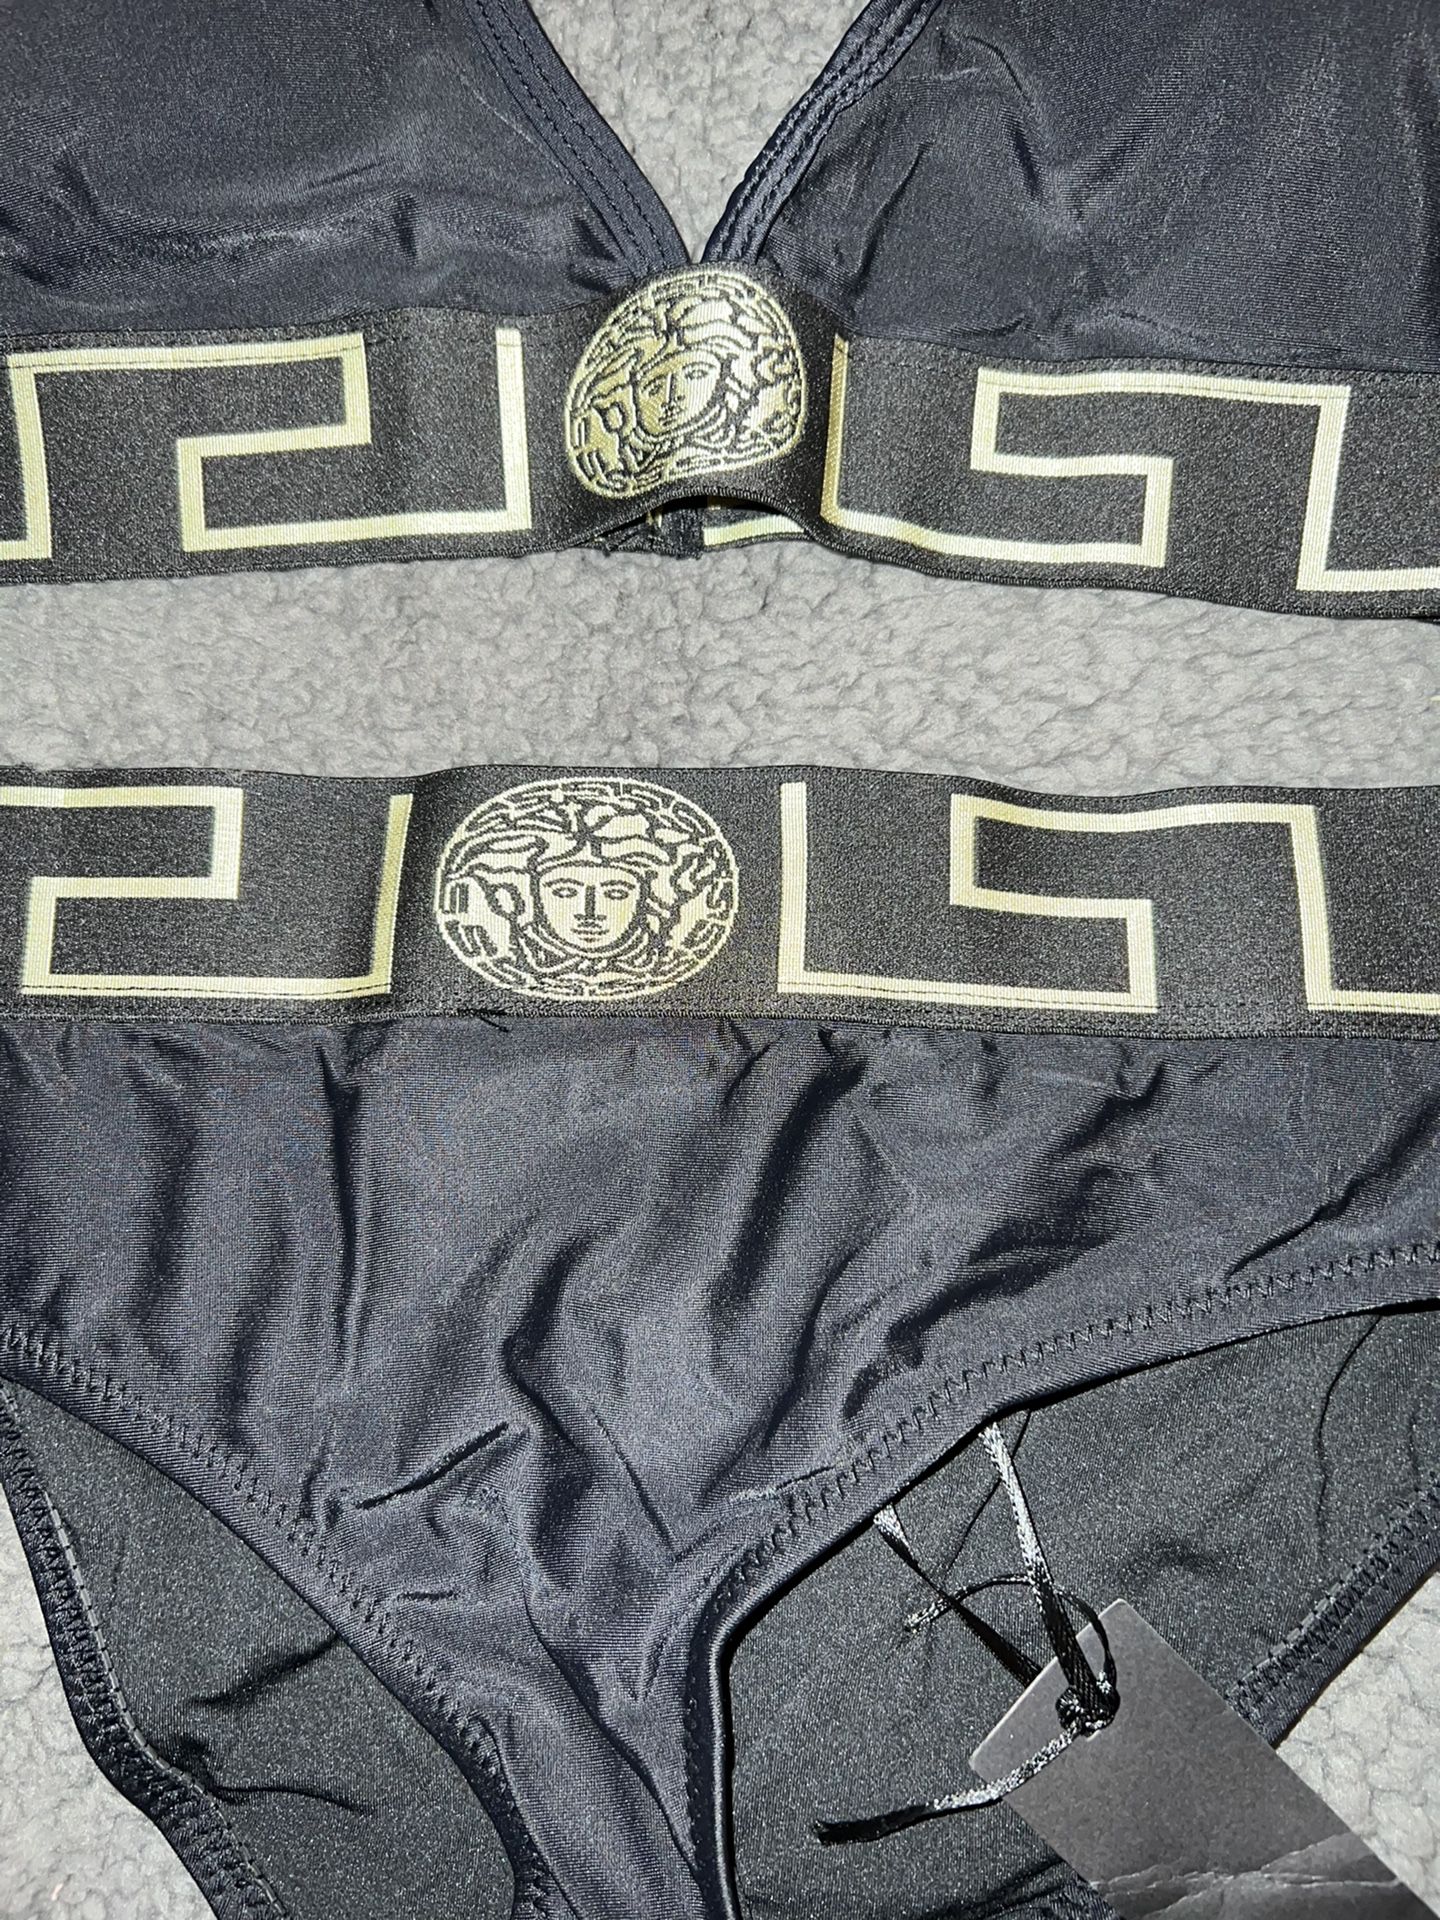 Versace 2pc Swimsuit! ( Womens size S)